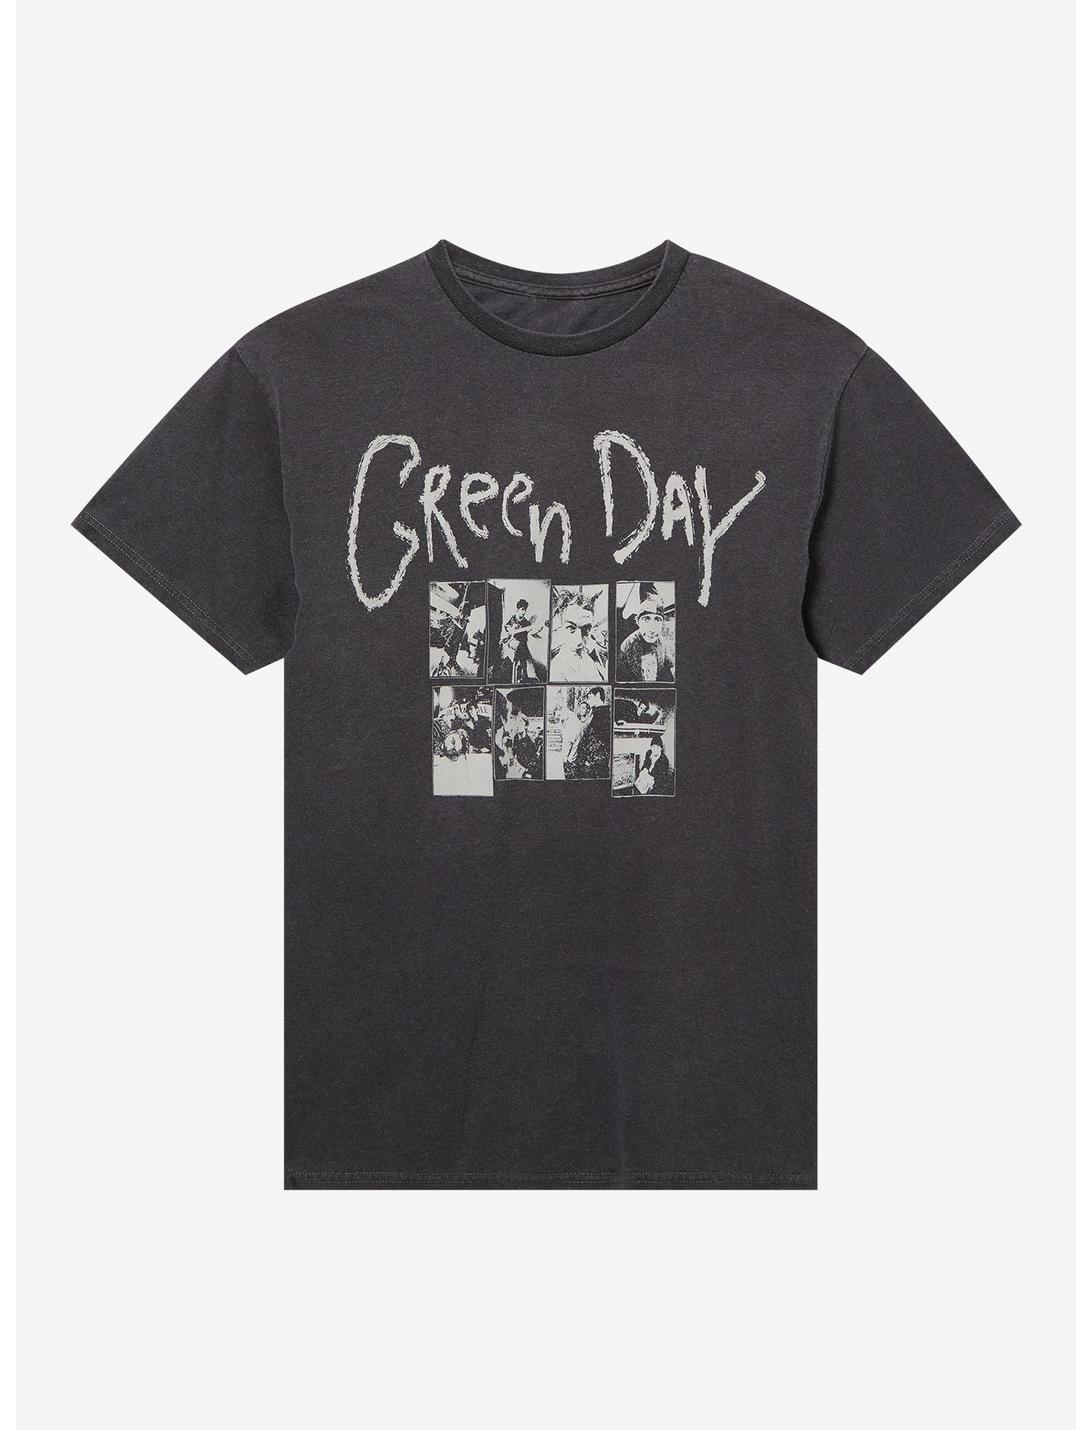 Green Day Photo Collage Washed Boyfriend Fit Girls T-Shirt, BLACK, hi-res